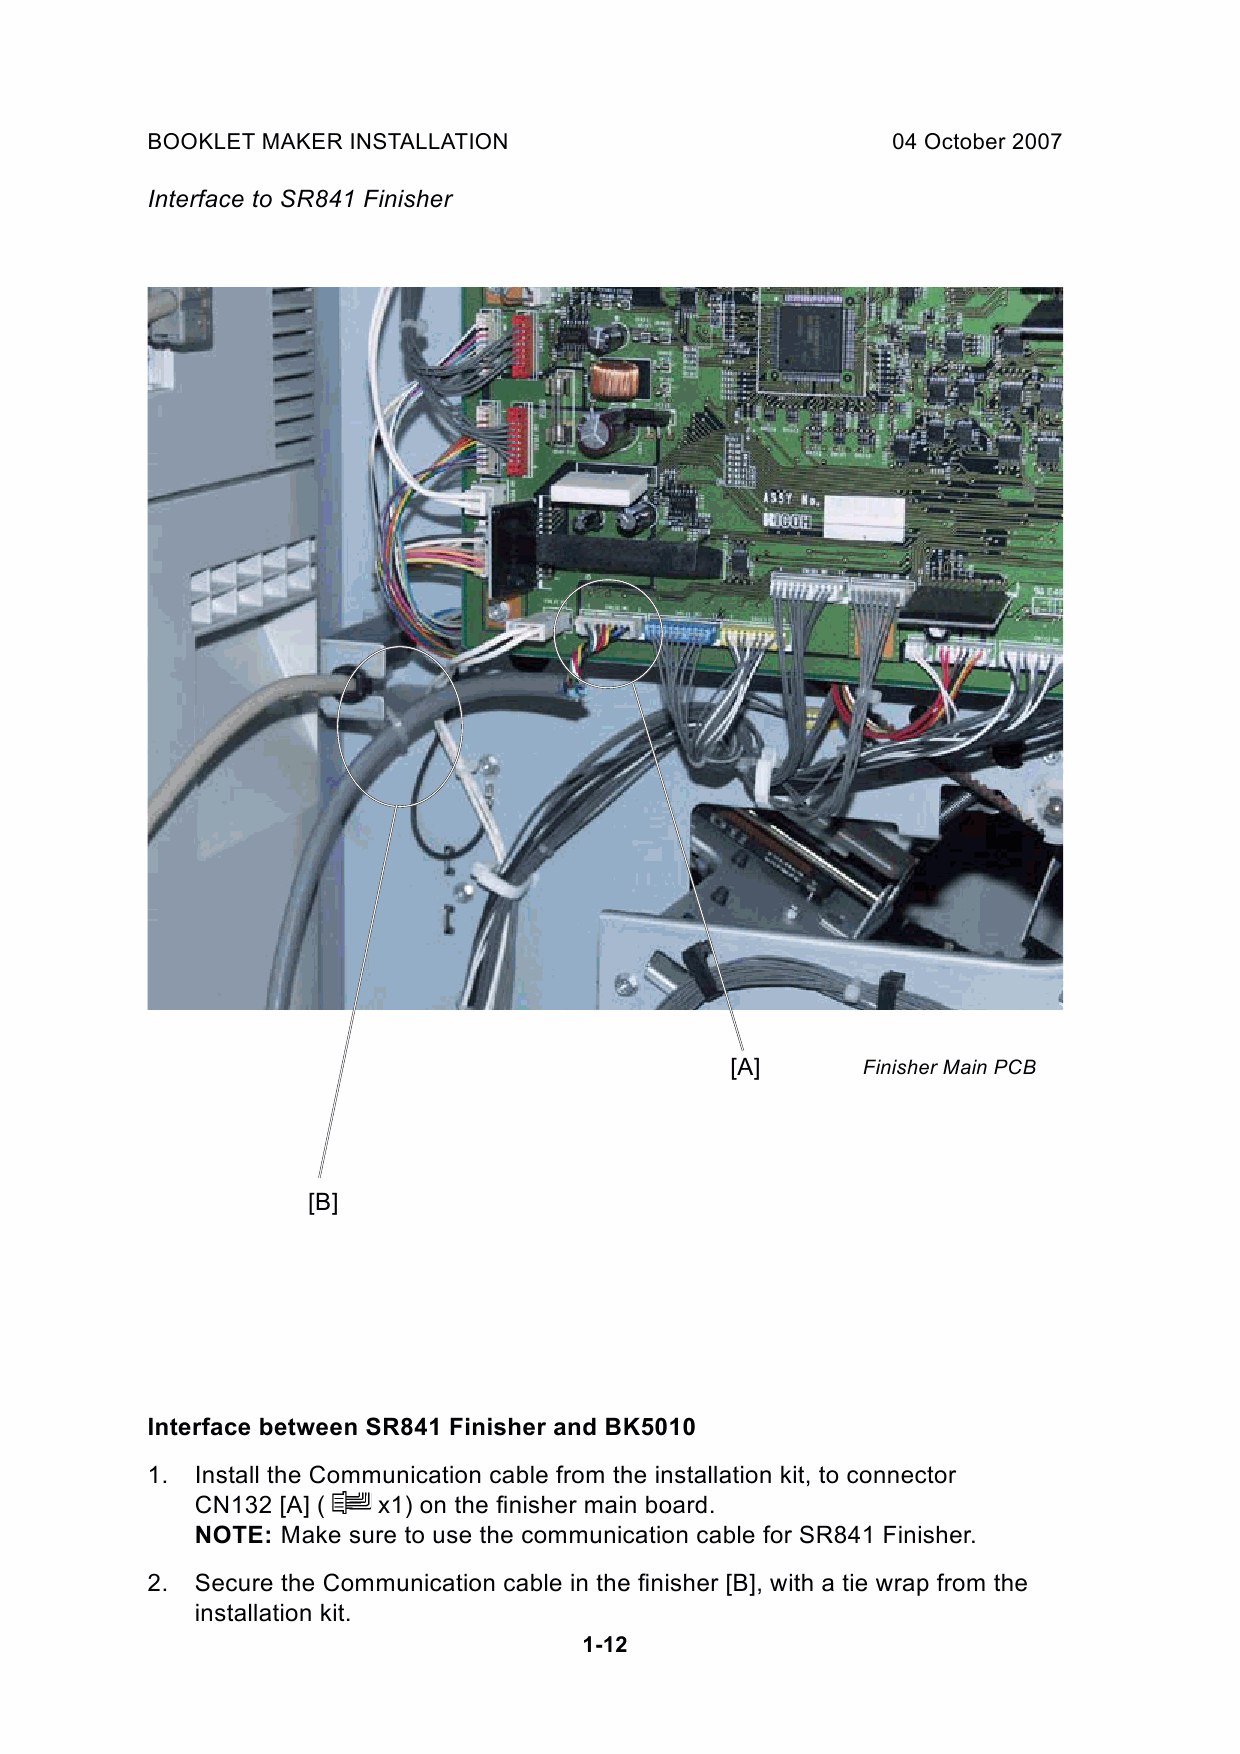 RICOH Options BK5010 Booklet-Maker Service Manual PDF download-5